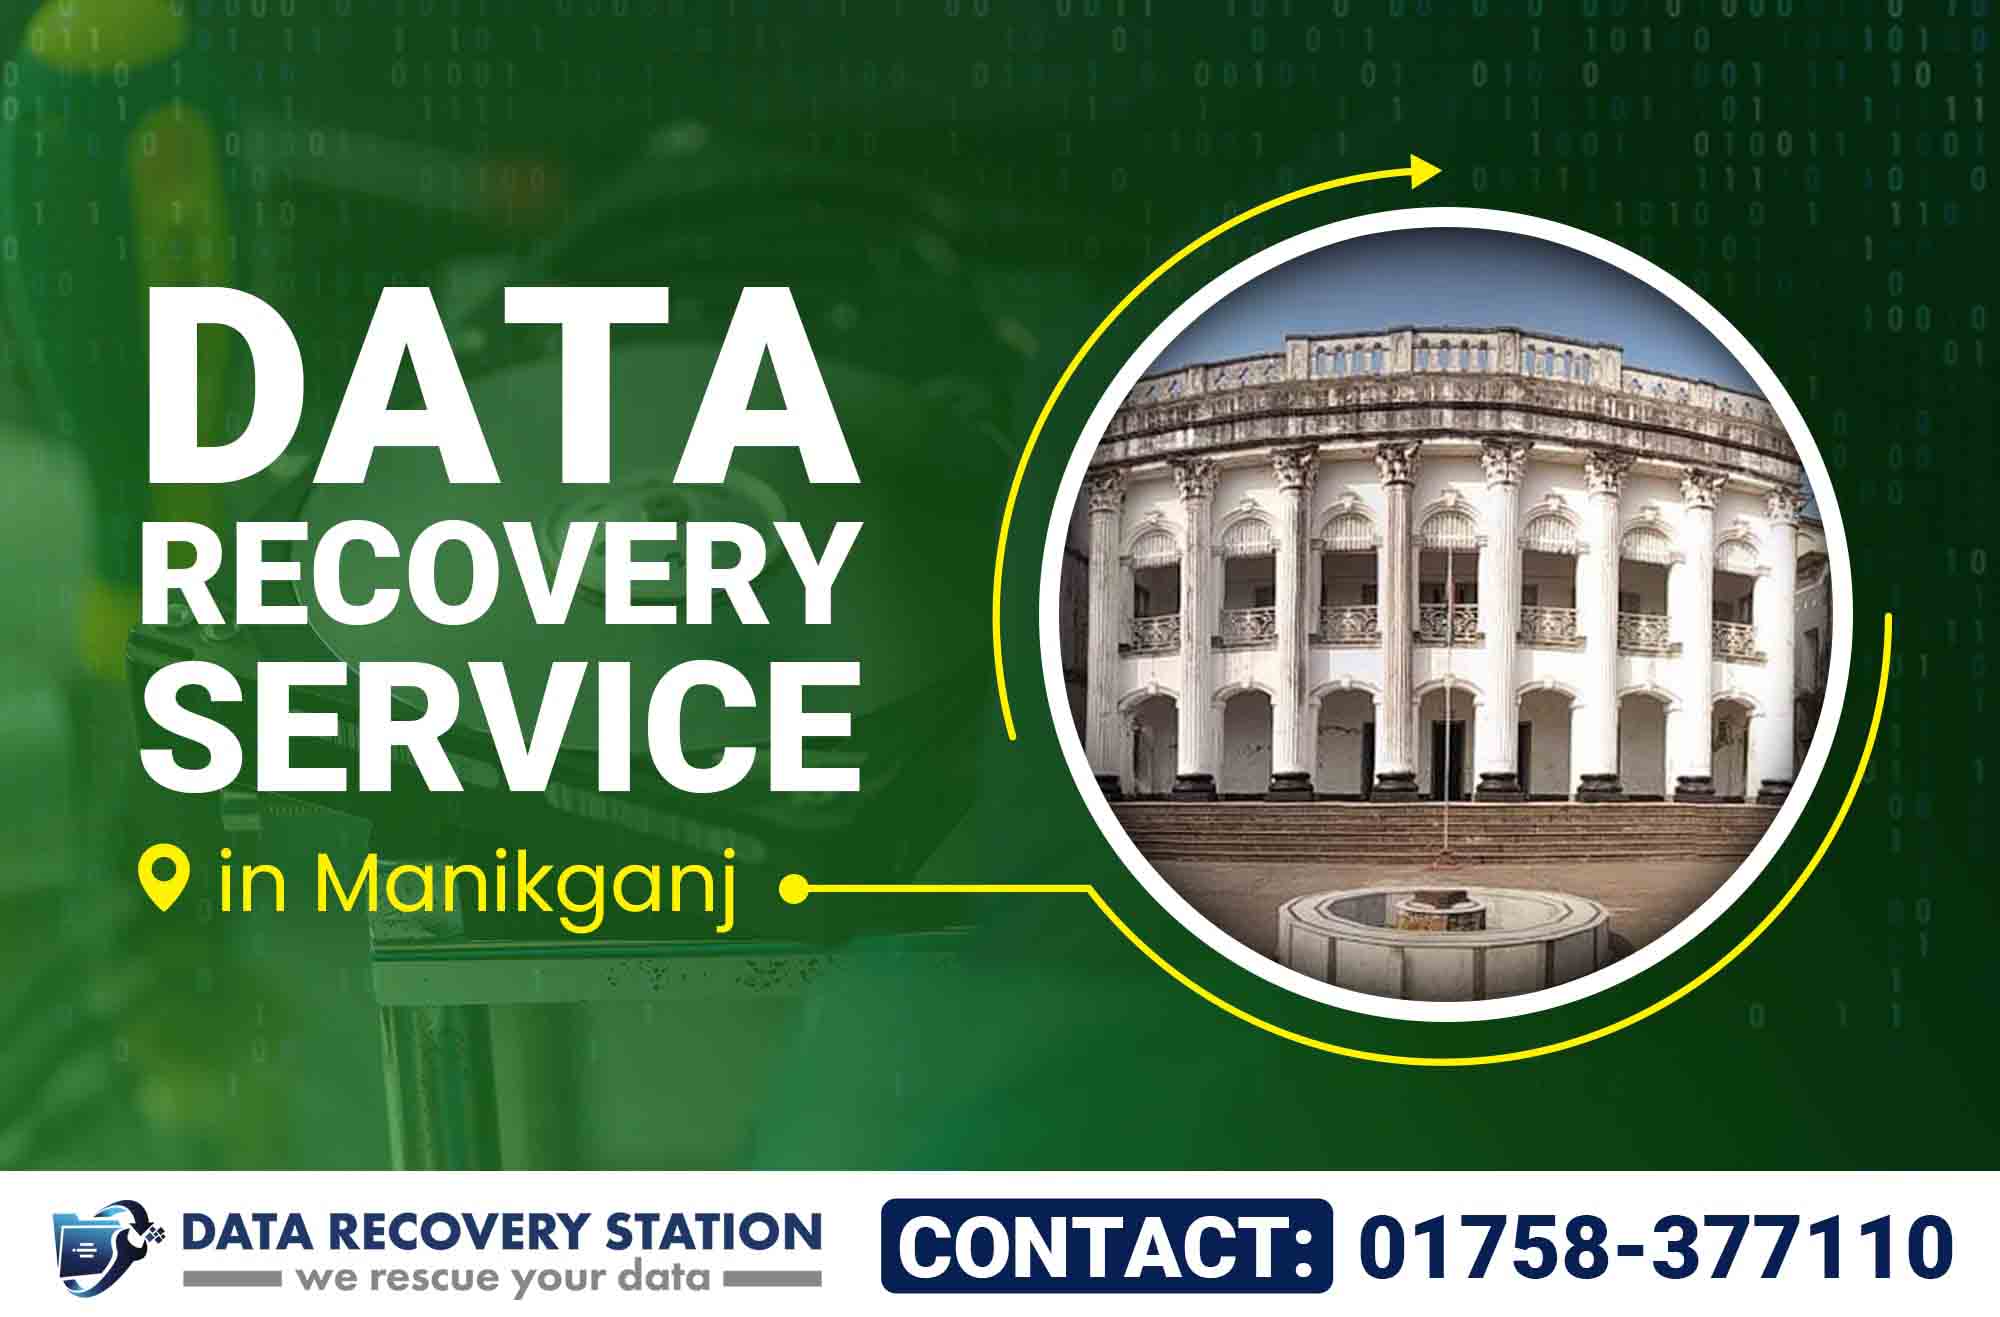 Data Recovery Service in Manikganj